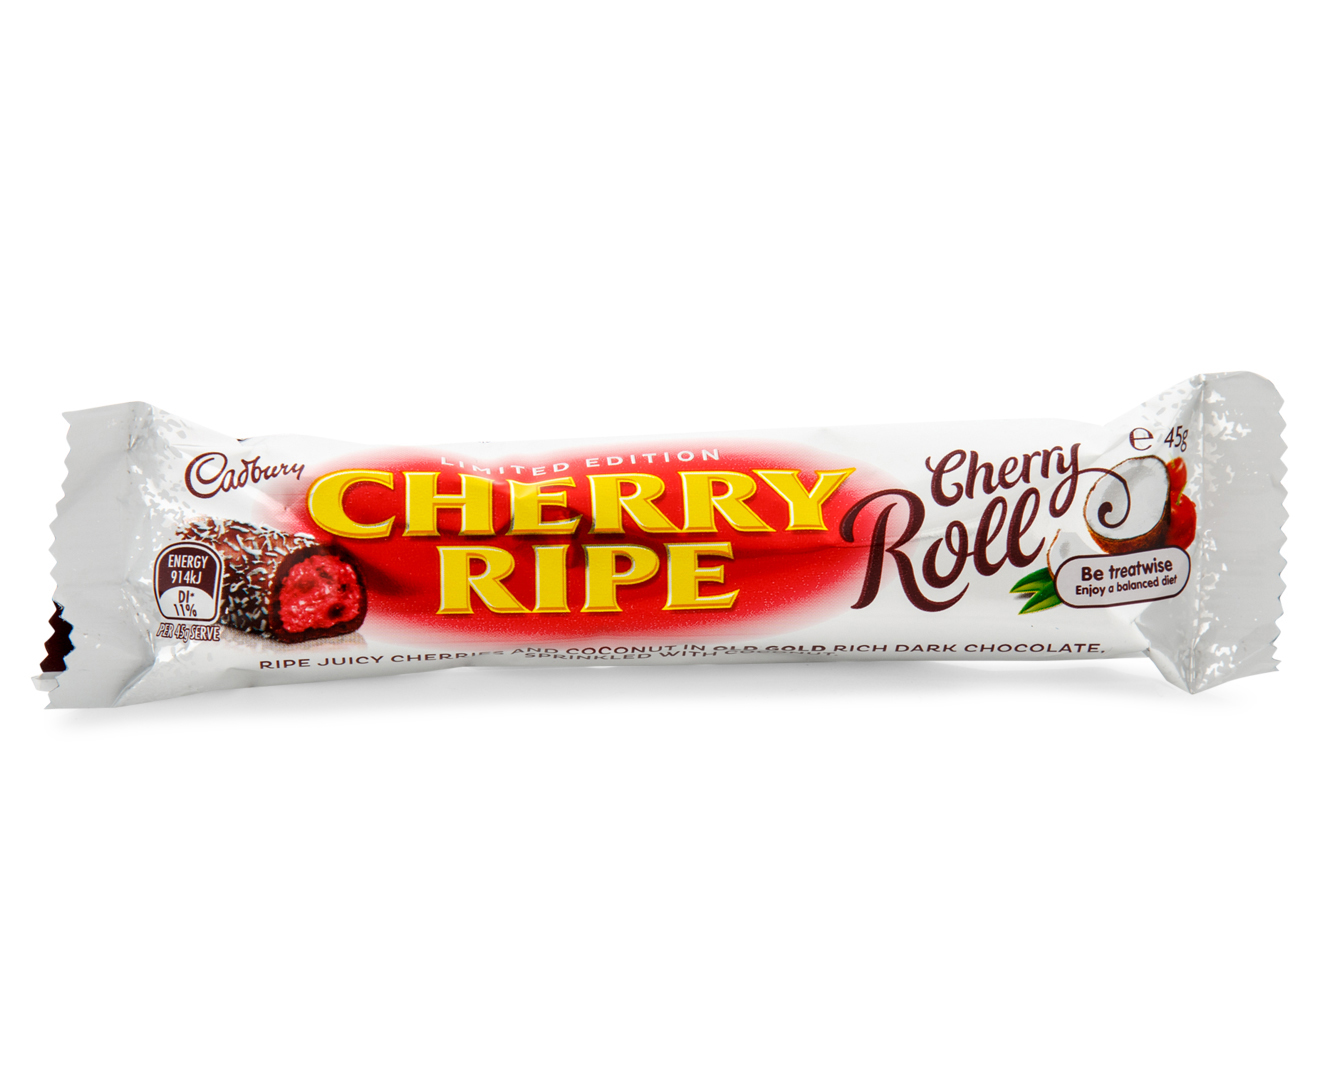 36 x Cadbury Cherry Ripe Cherry Roll Bar 45g | Catch.com.au